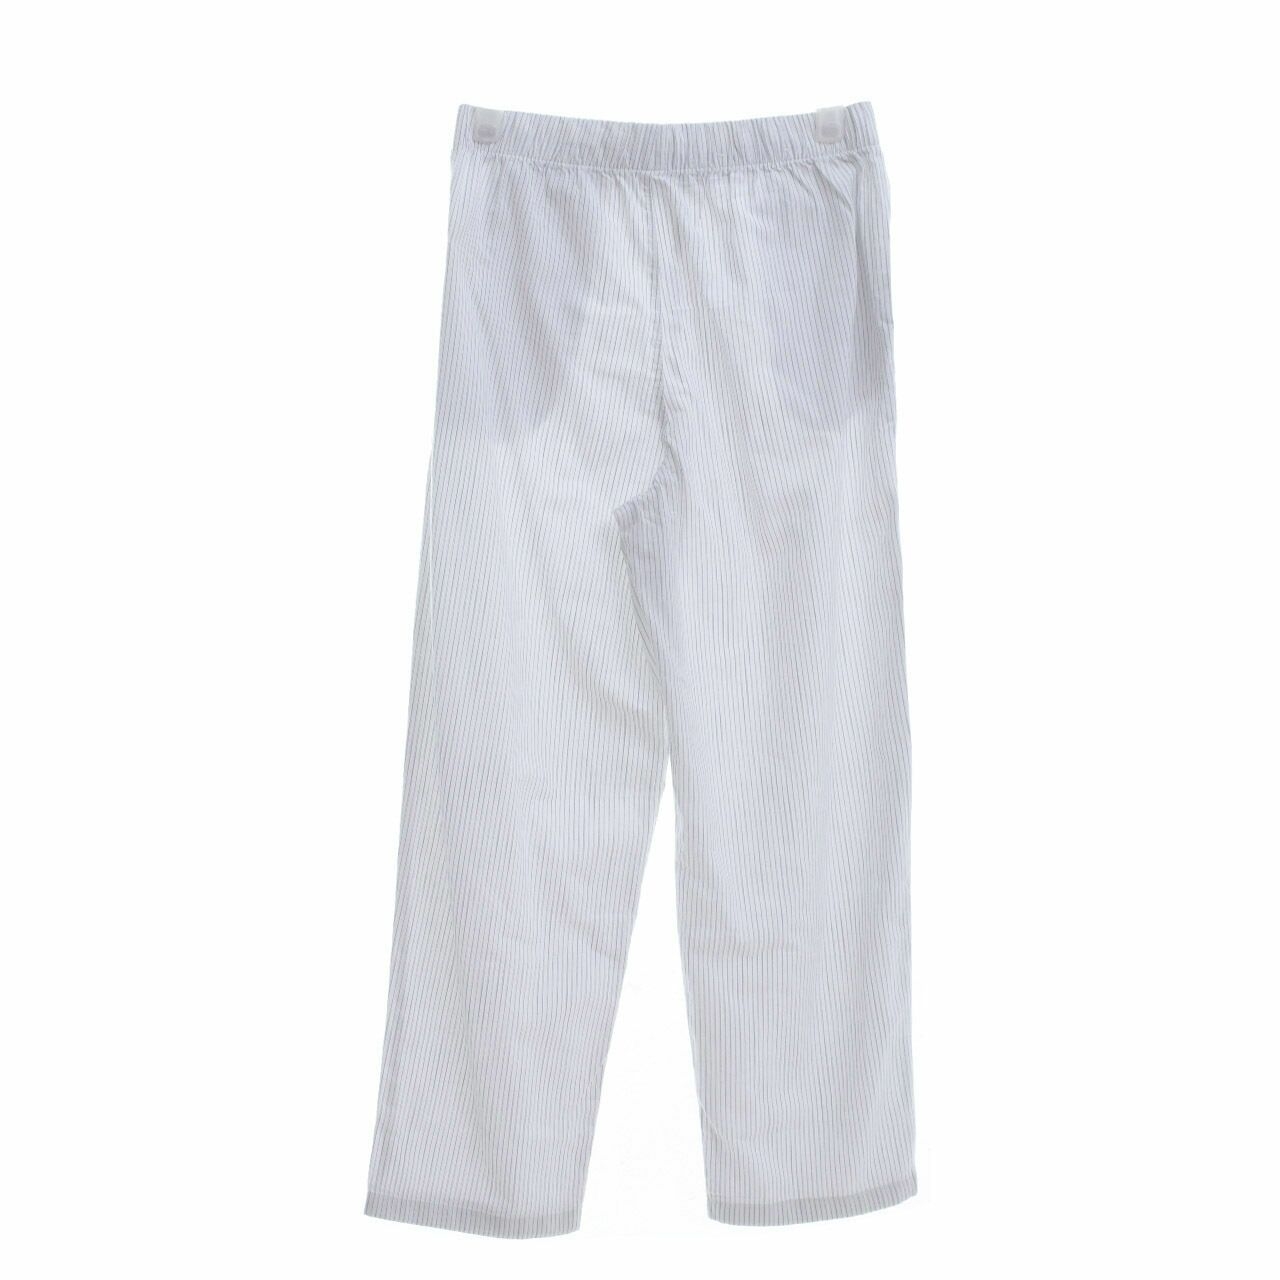 UNIQLO White Stripes Long Pants